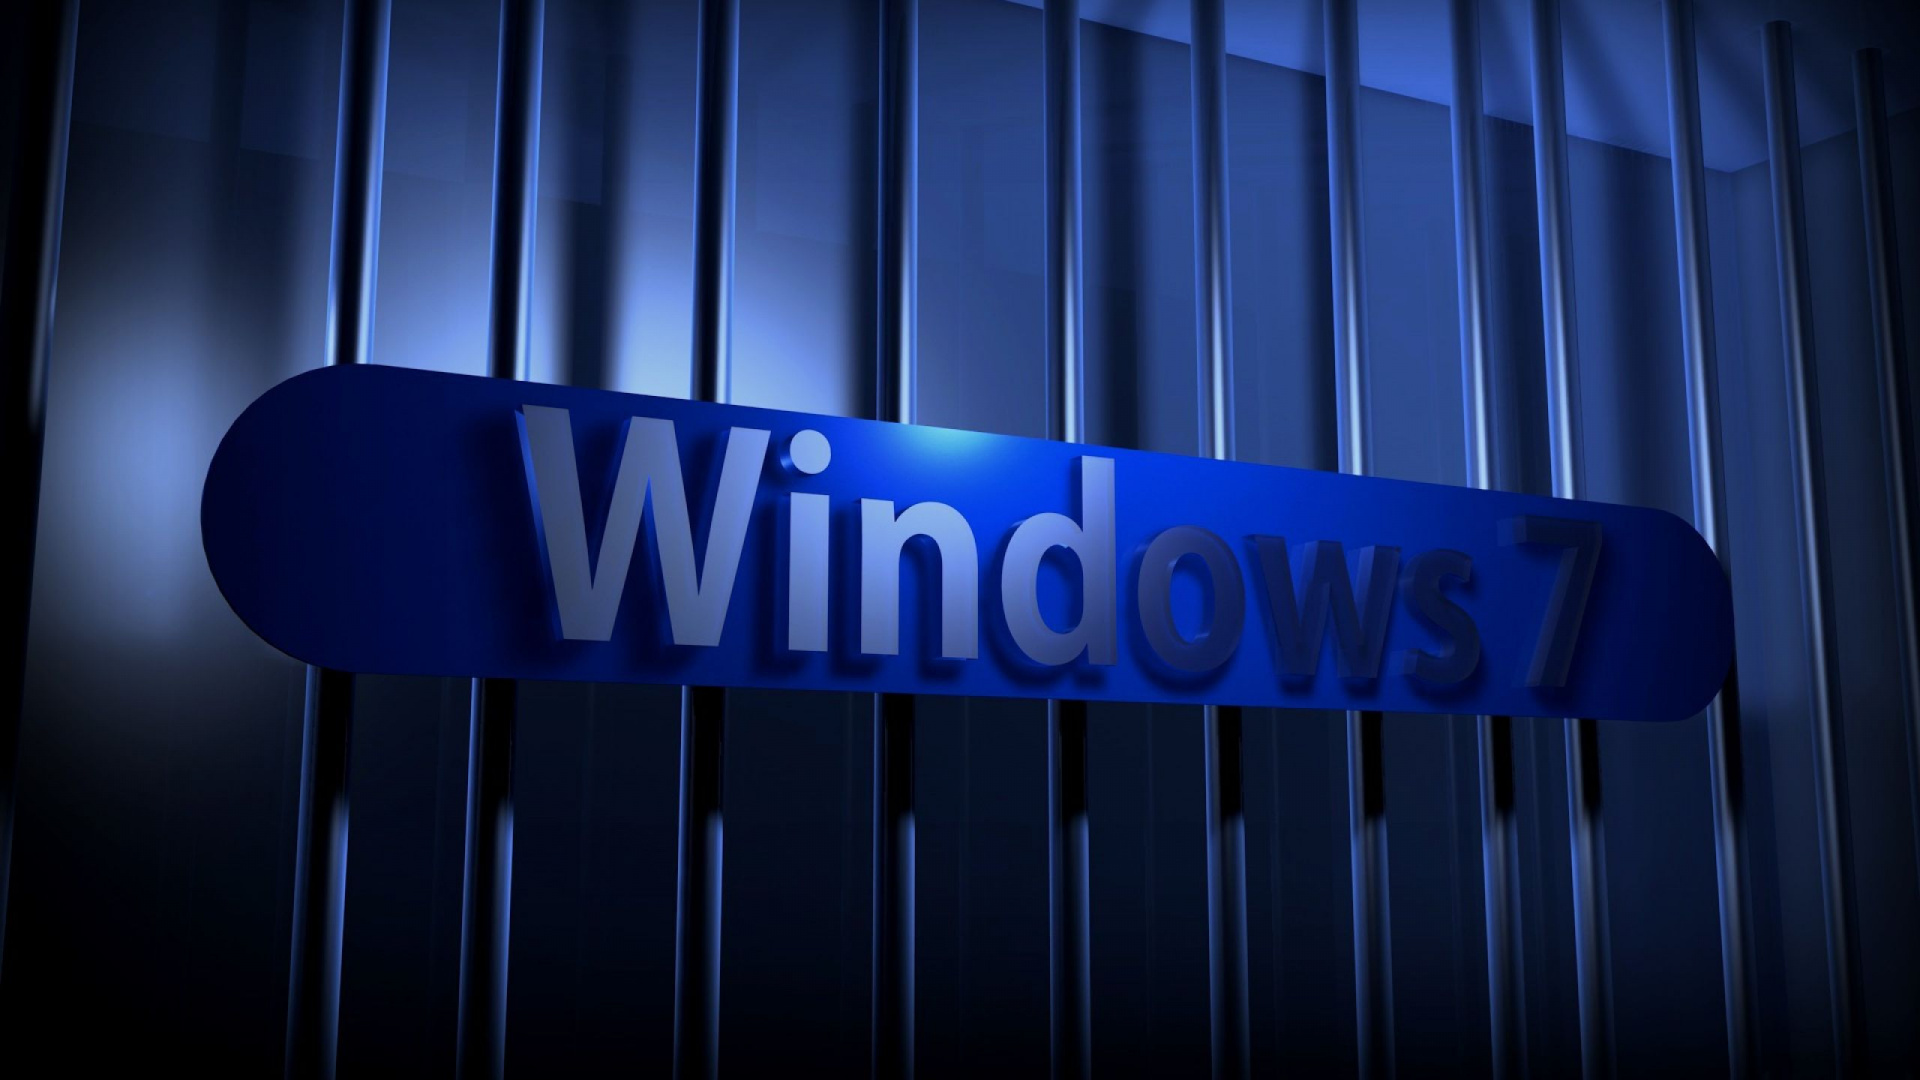 Windows 7, Azul, Luz, Logotipo, Windows 10. Wallpaper in 1920x1080 Resolution